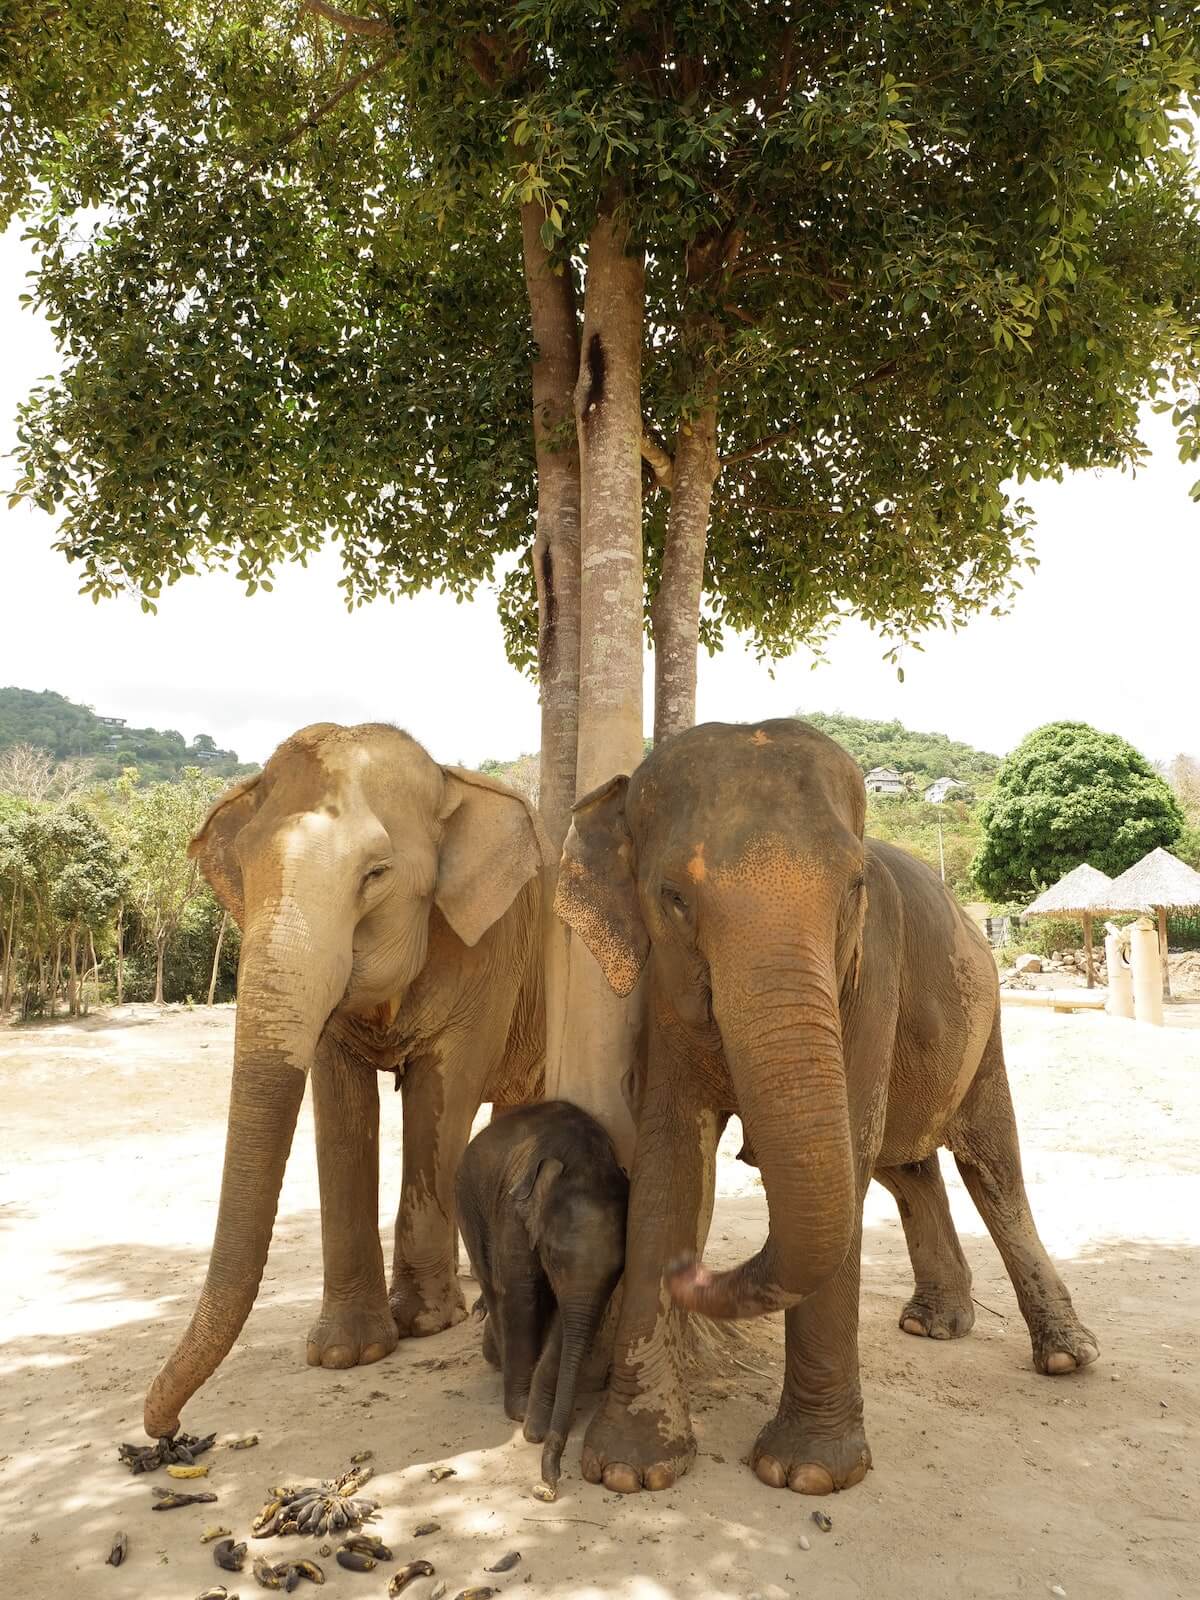 Elephants in their sanctuary in Koh Samui, Thailand